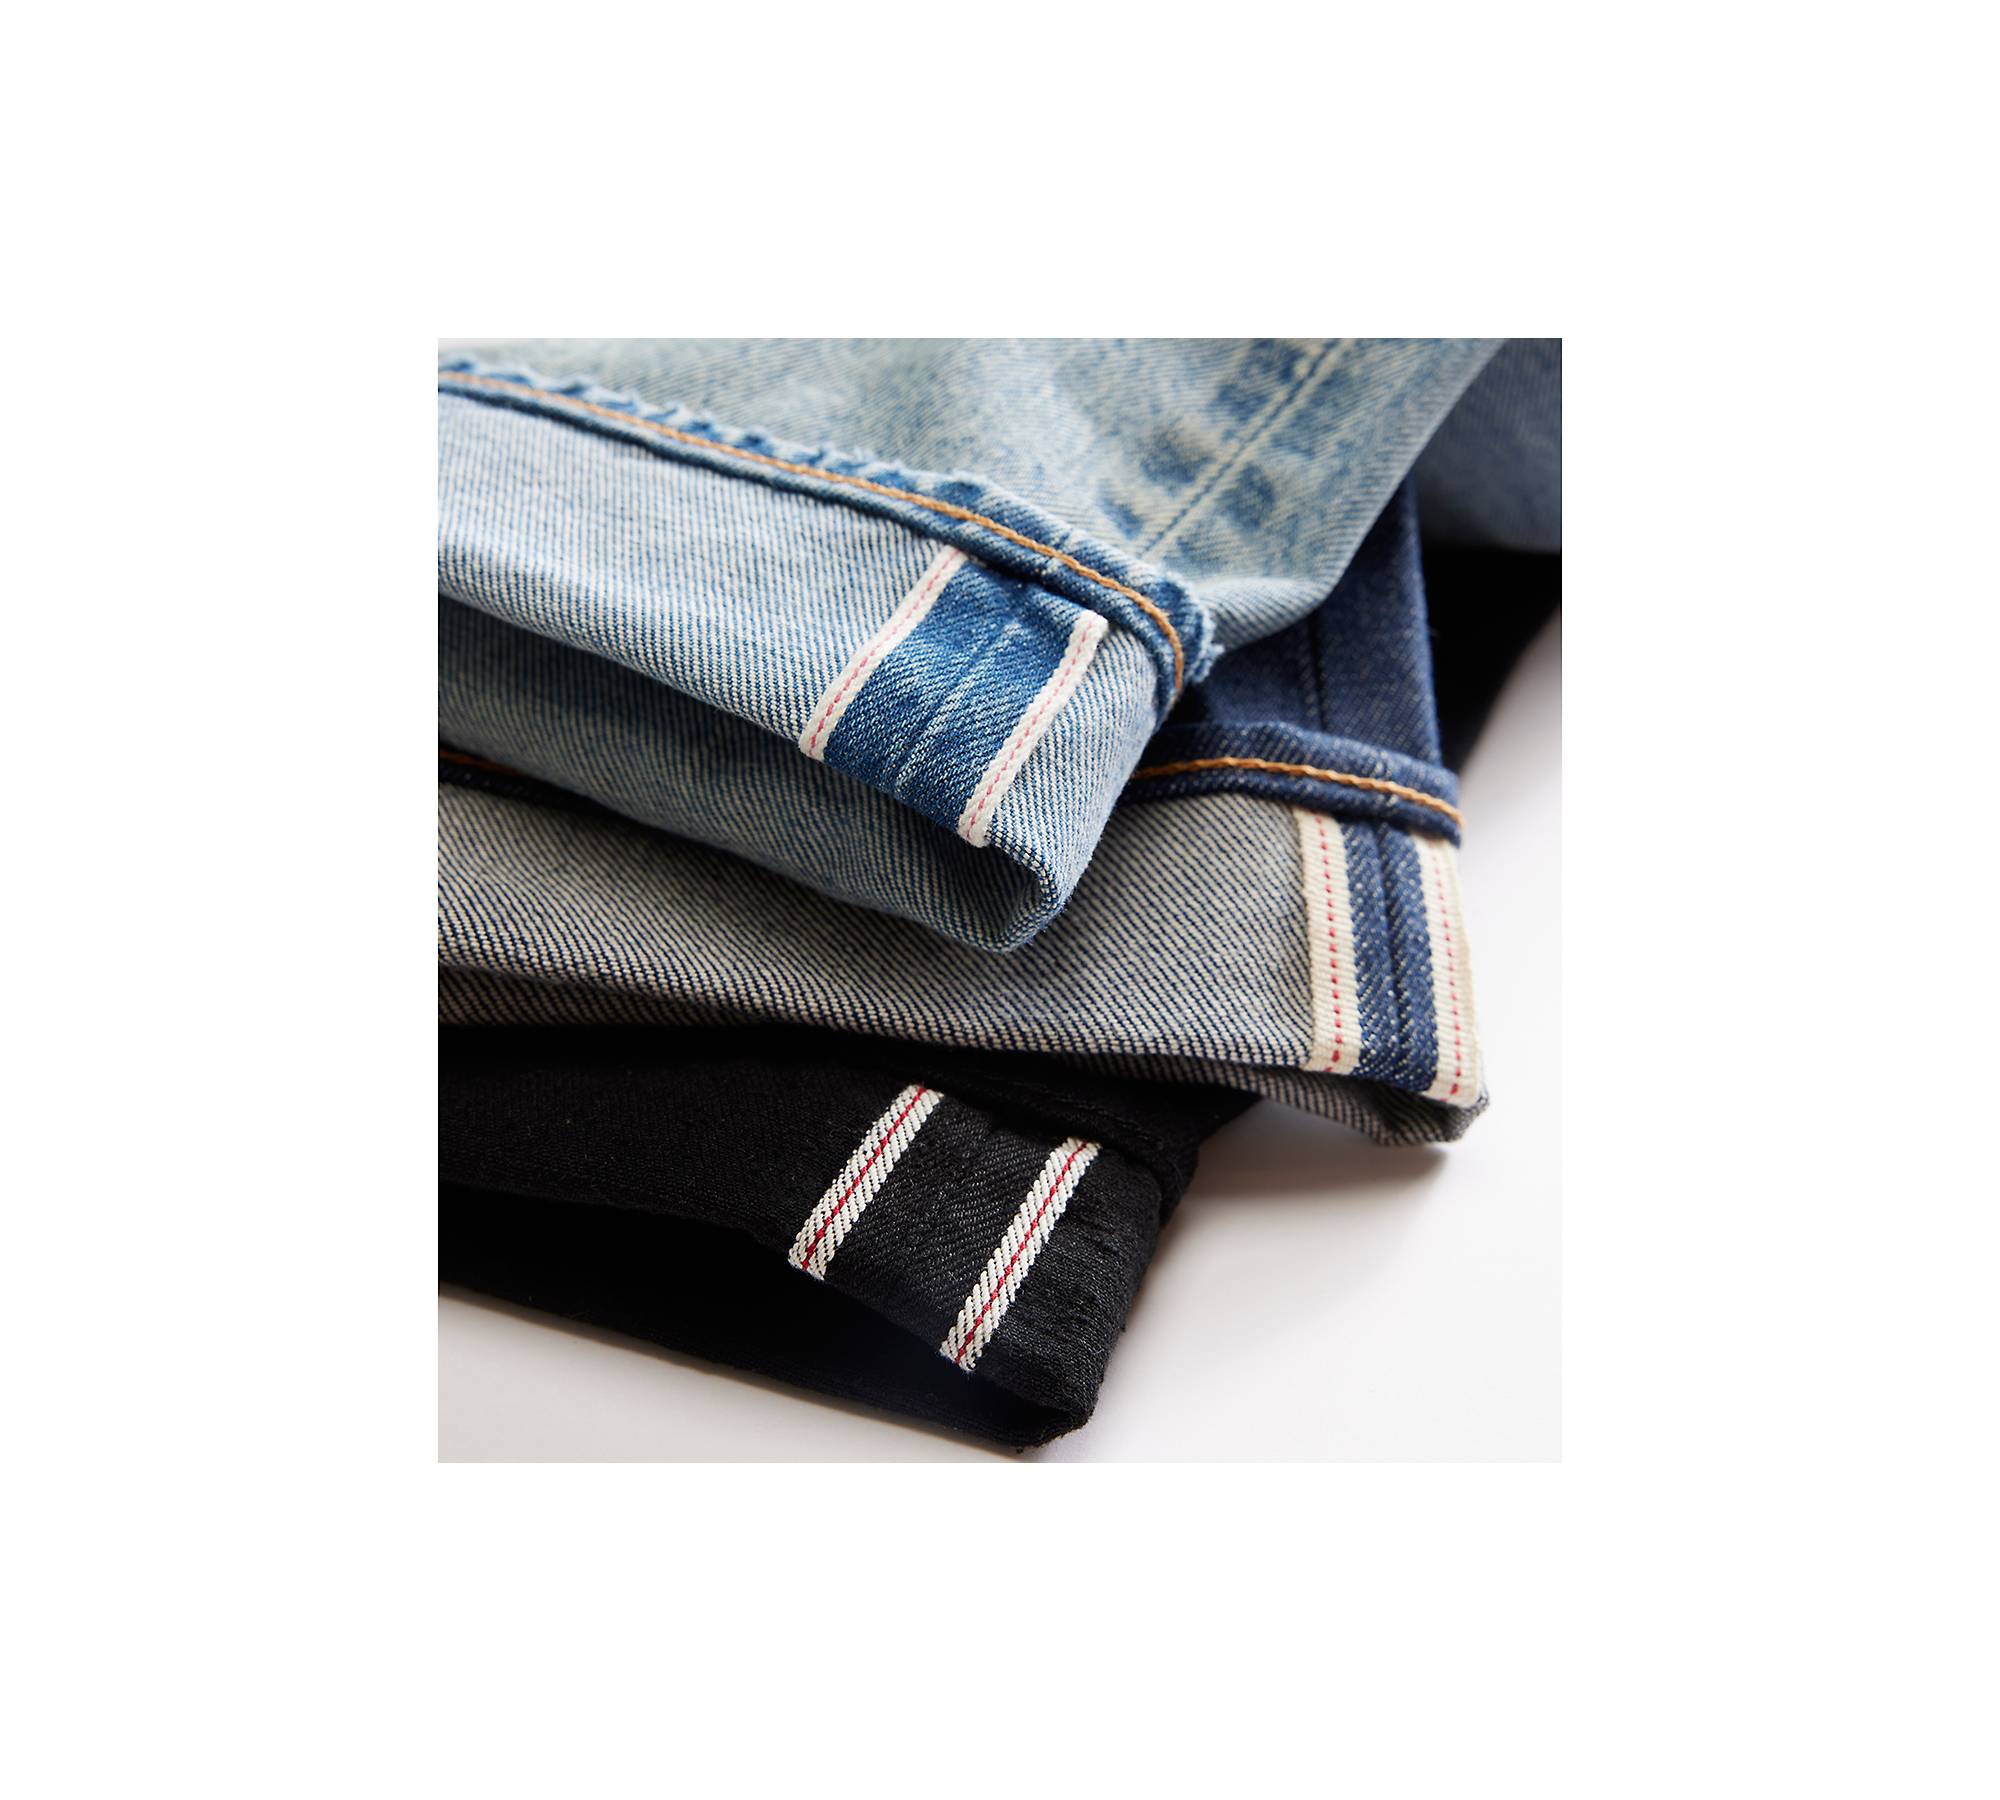 1967 505® Regular Fit Selvedge Men's Jeans - Medium Wash | Levi's® US